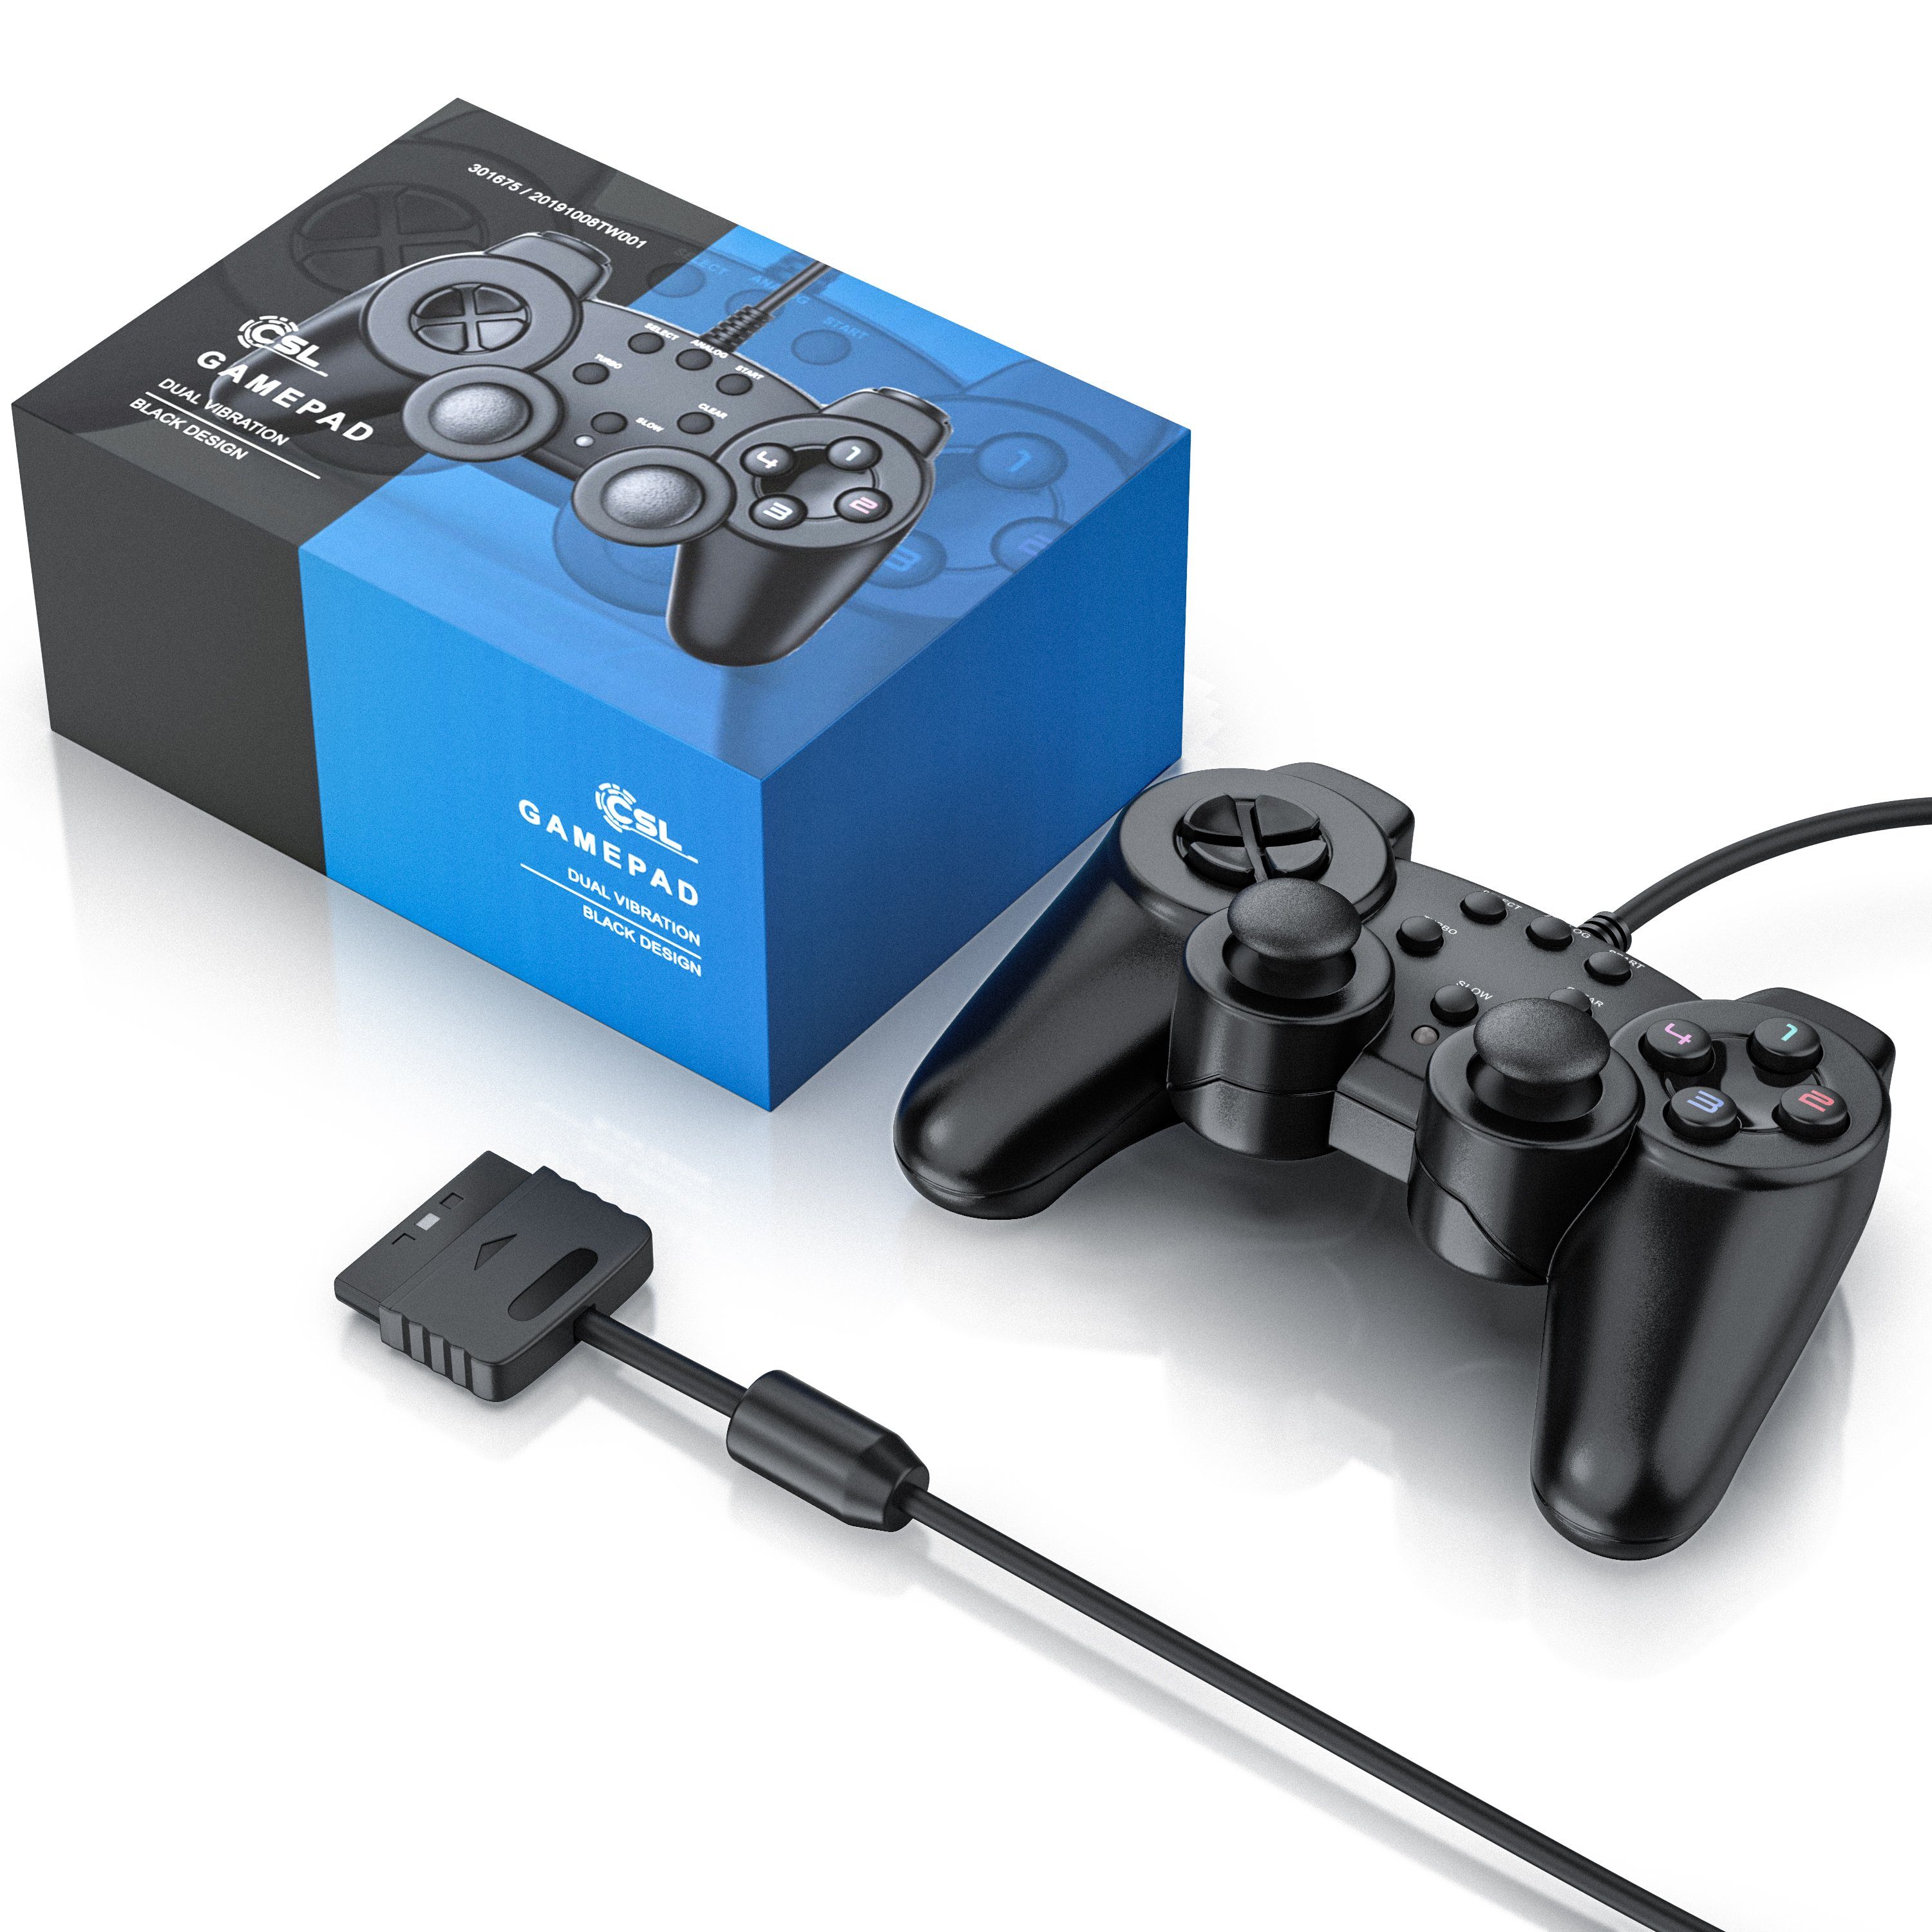 PlayStation-Controller Komfort) Gamepad CSL Vibration Effekt), (Rumble (1 & mit PS2 St., Präzision Dual